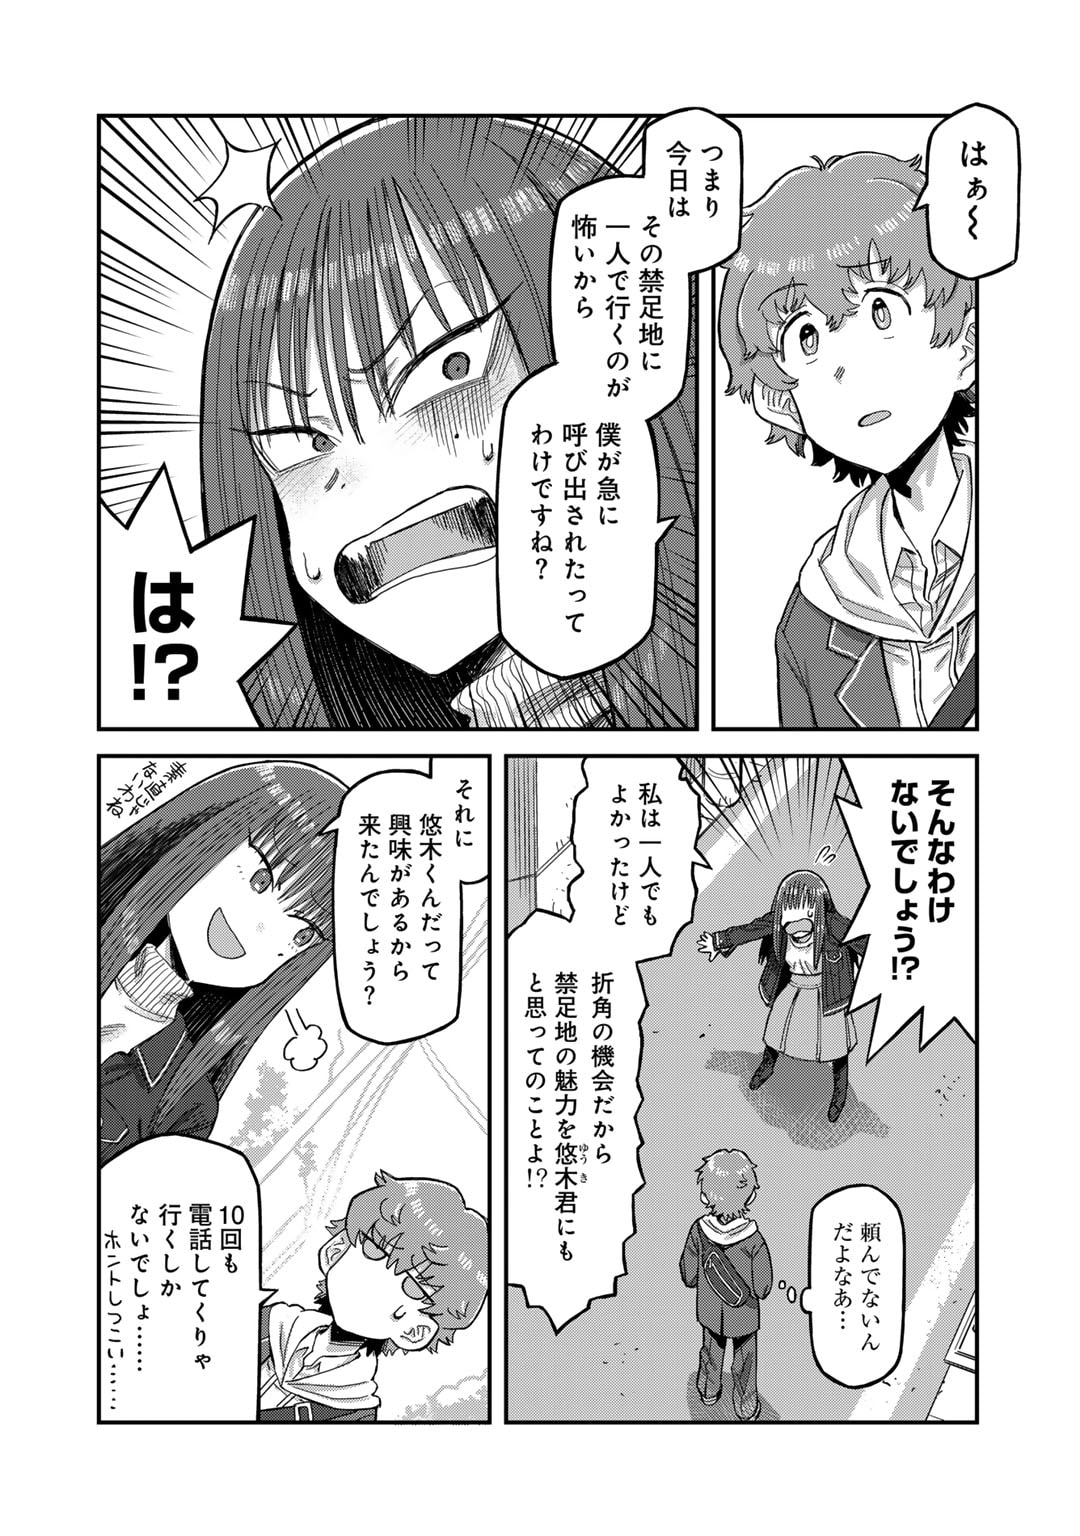 Kurono-san wa Occult ga Suki! - Chapter 2 - Page 4